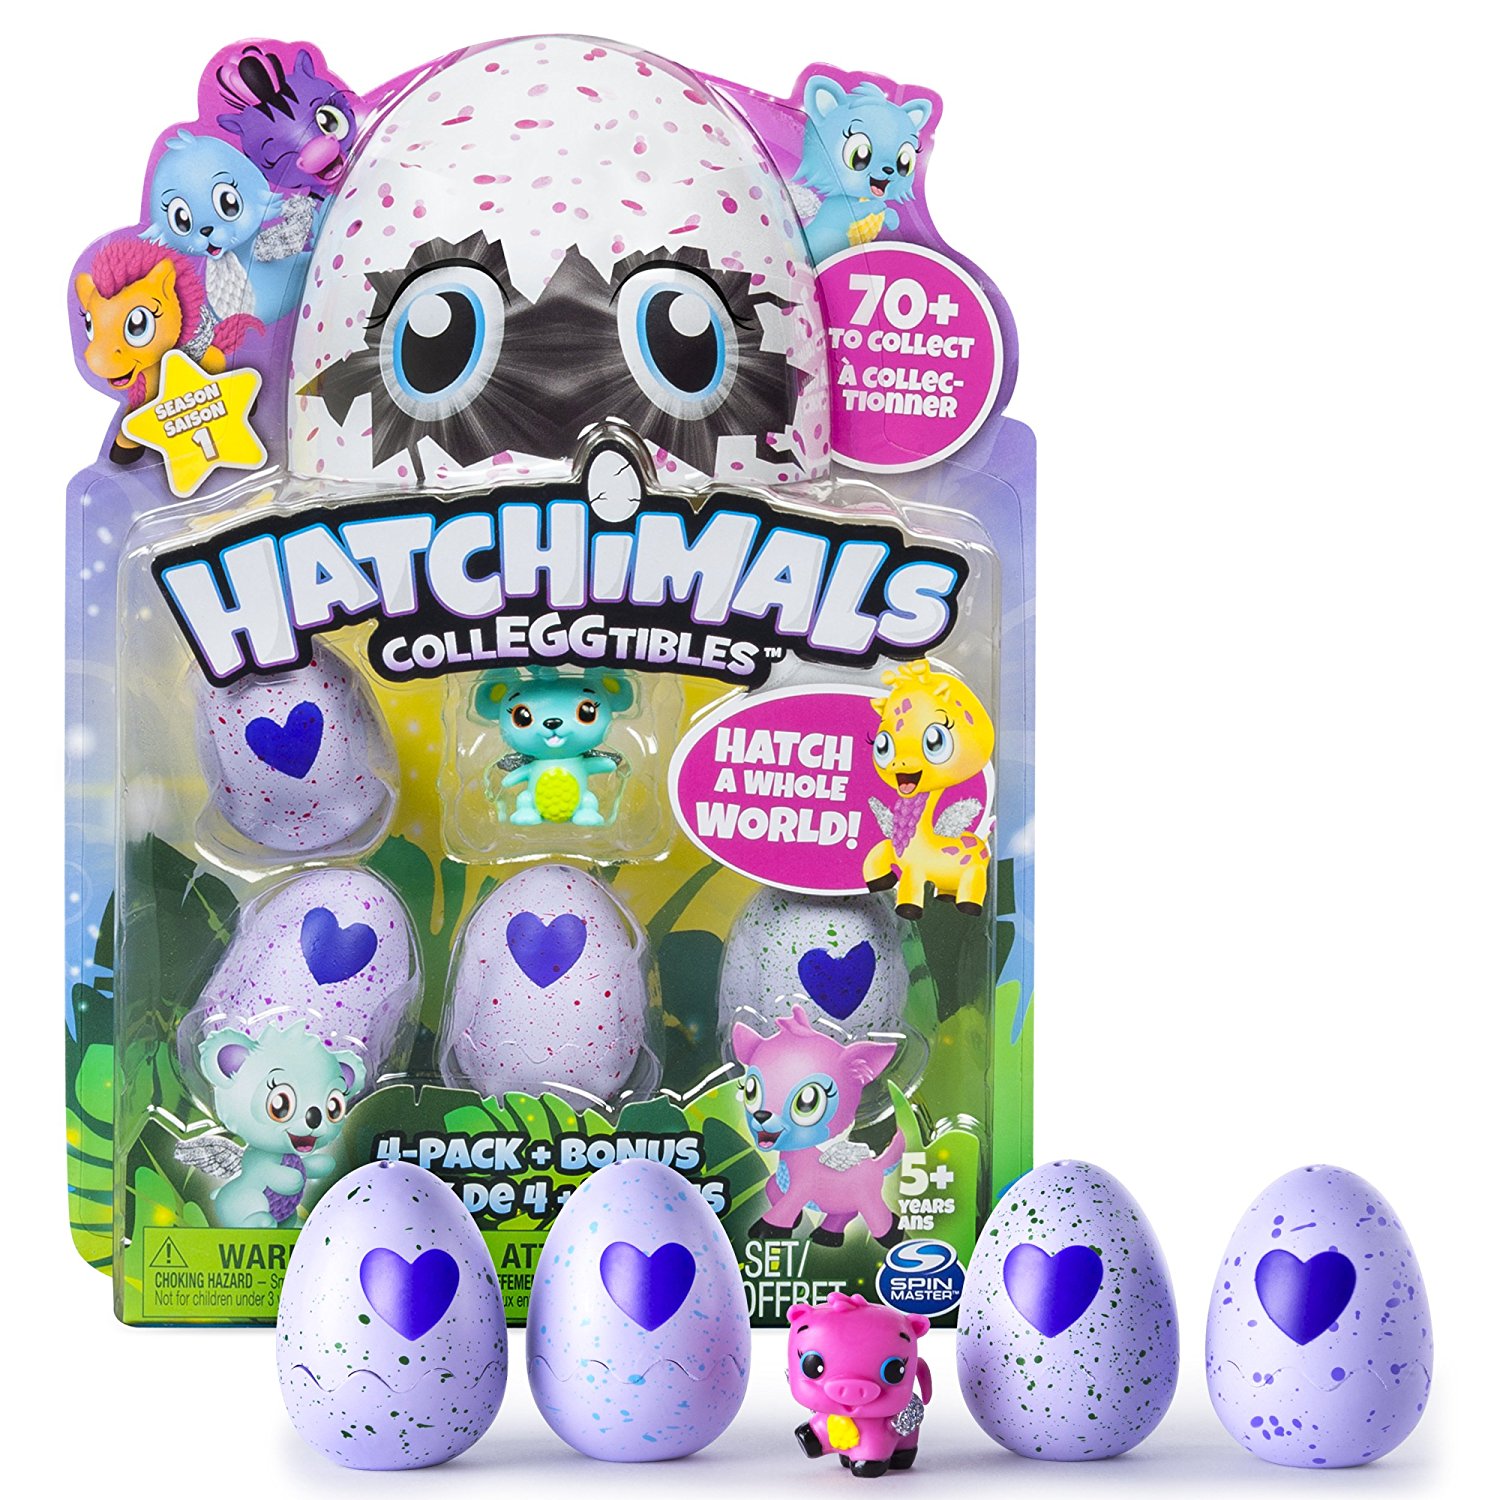 New & Preorder – Hatchimals CollEGGtibles – 4-Pack + Bonus – Just $29.99!